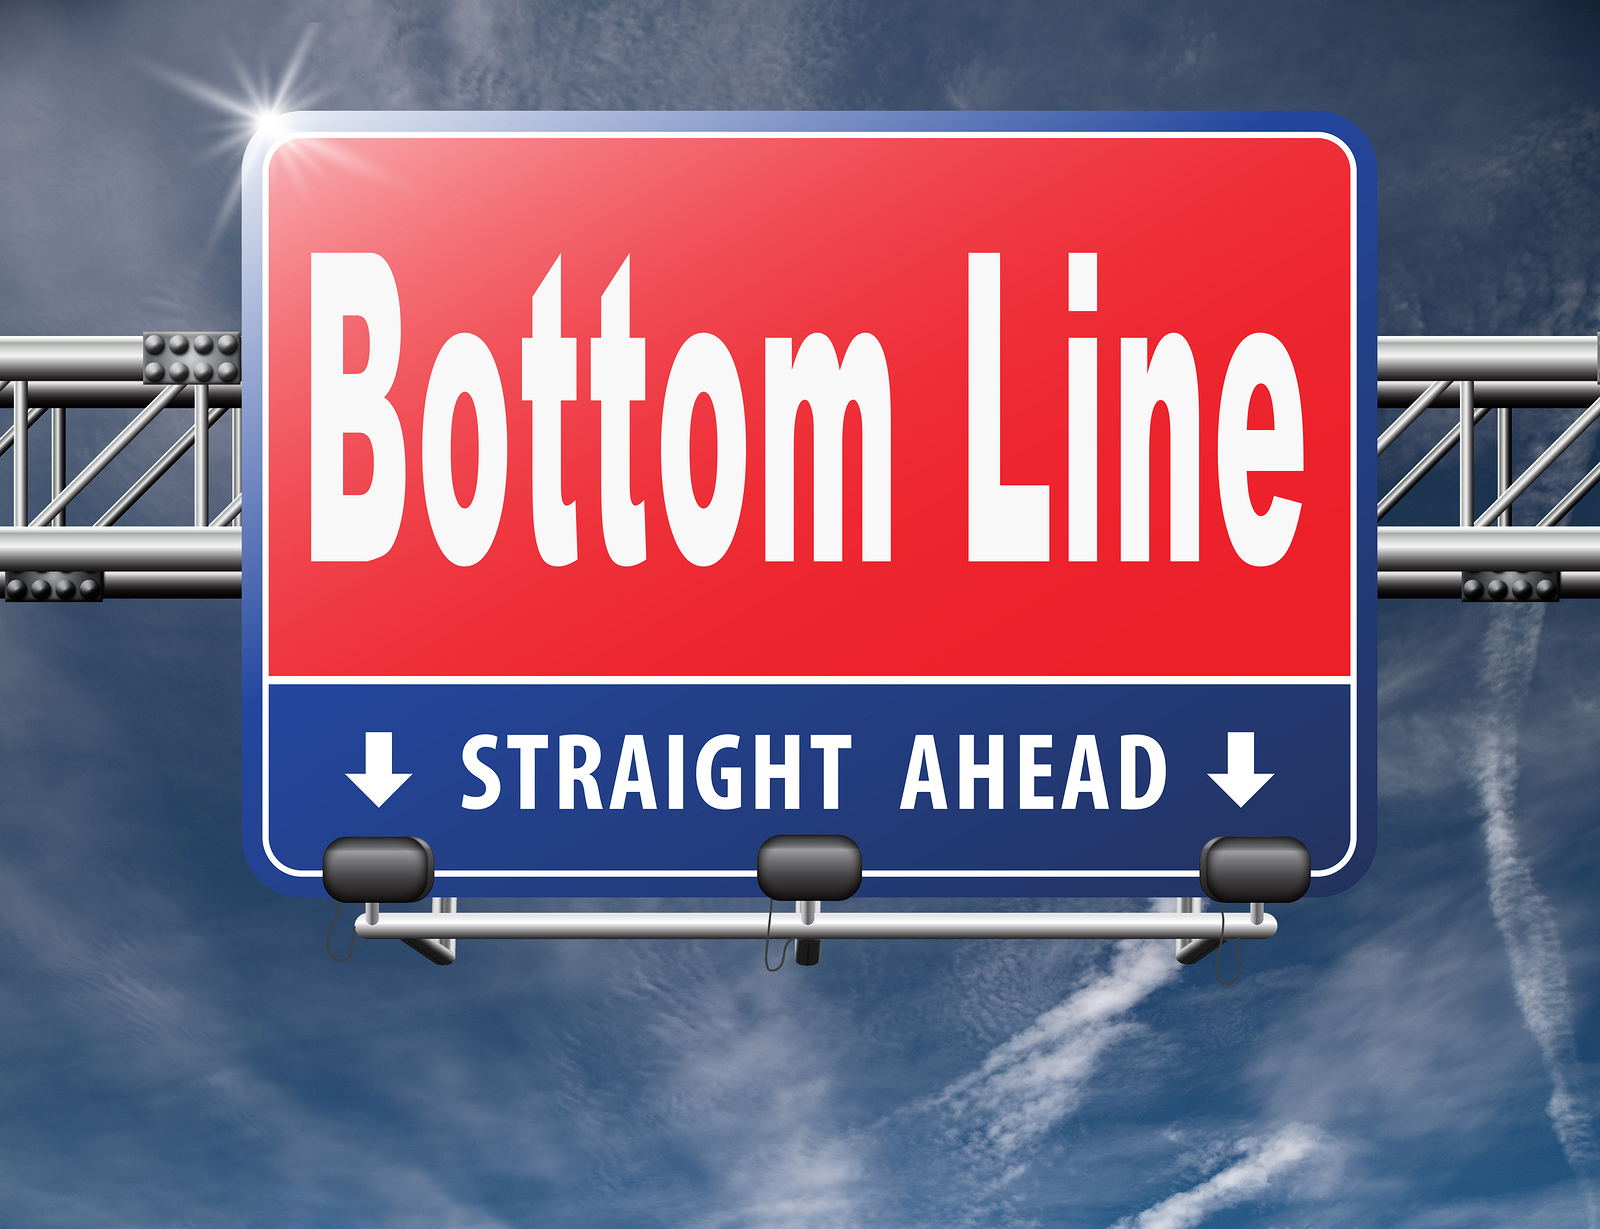 bottom line sign